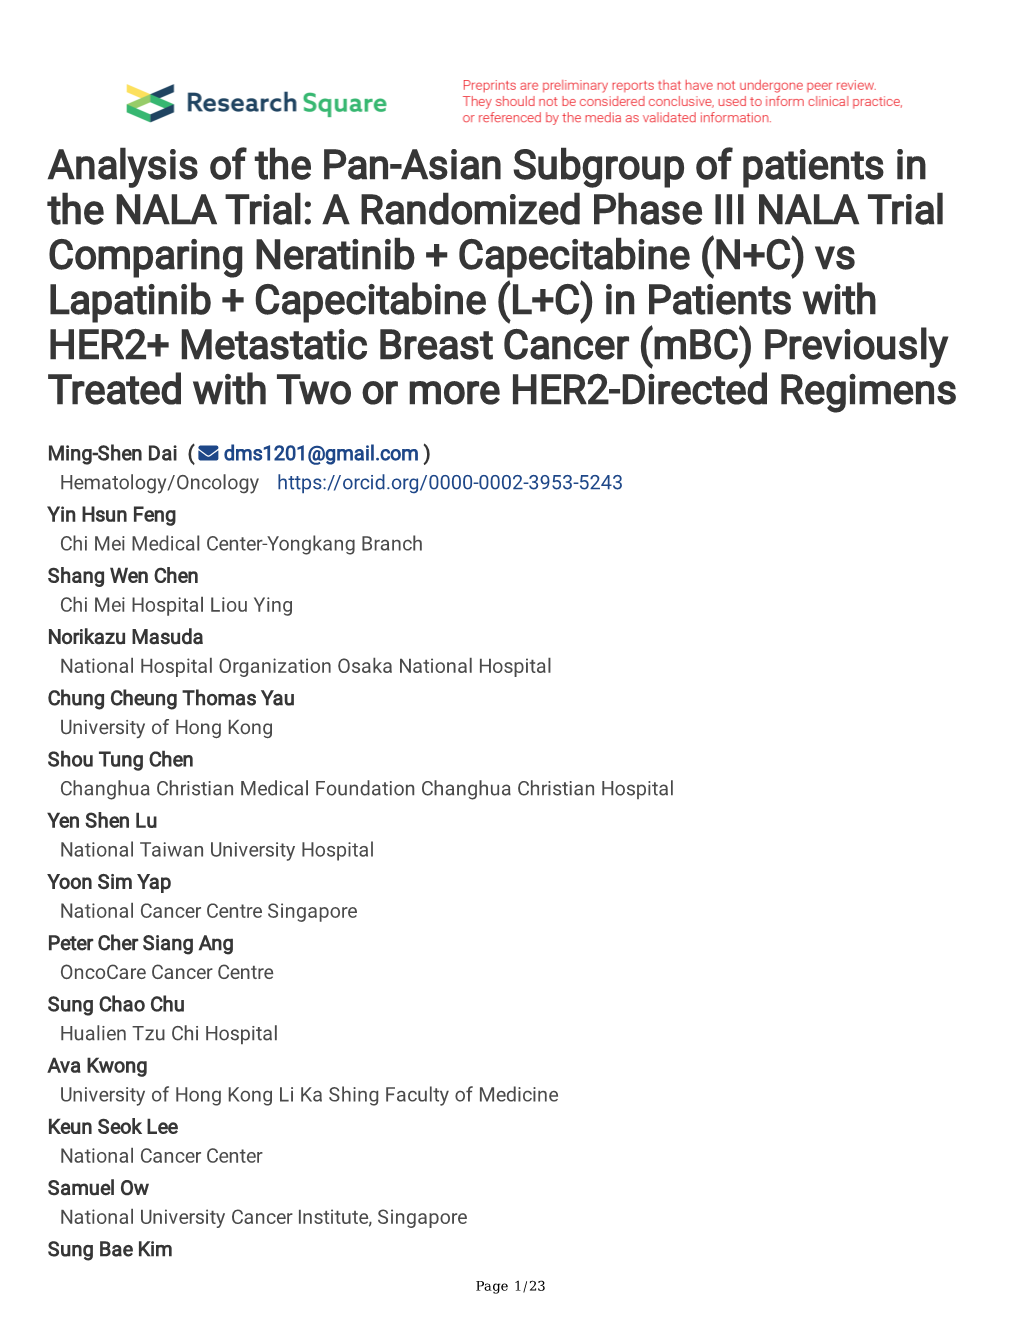 A Randomized Phase III NALA Trial Comparing